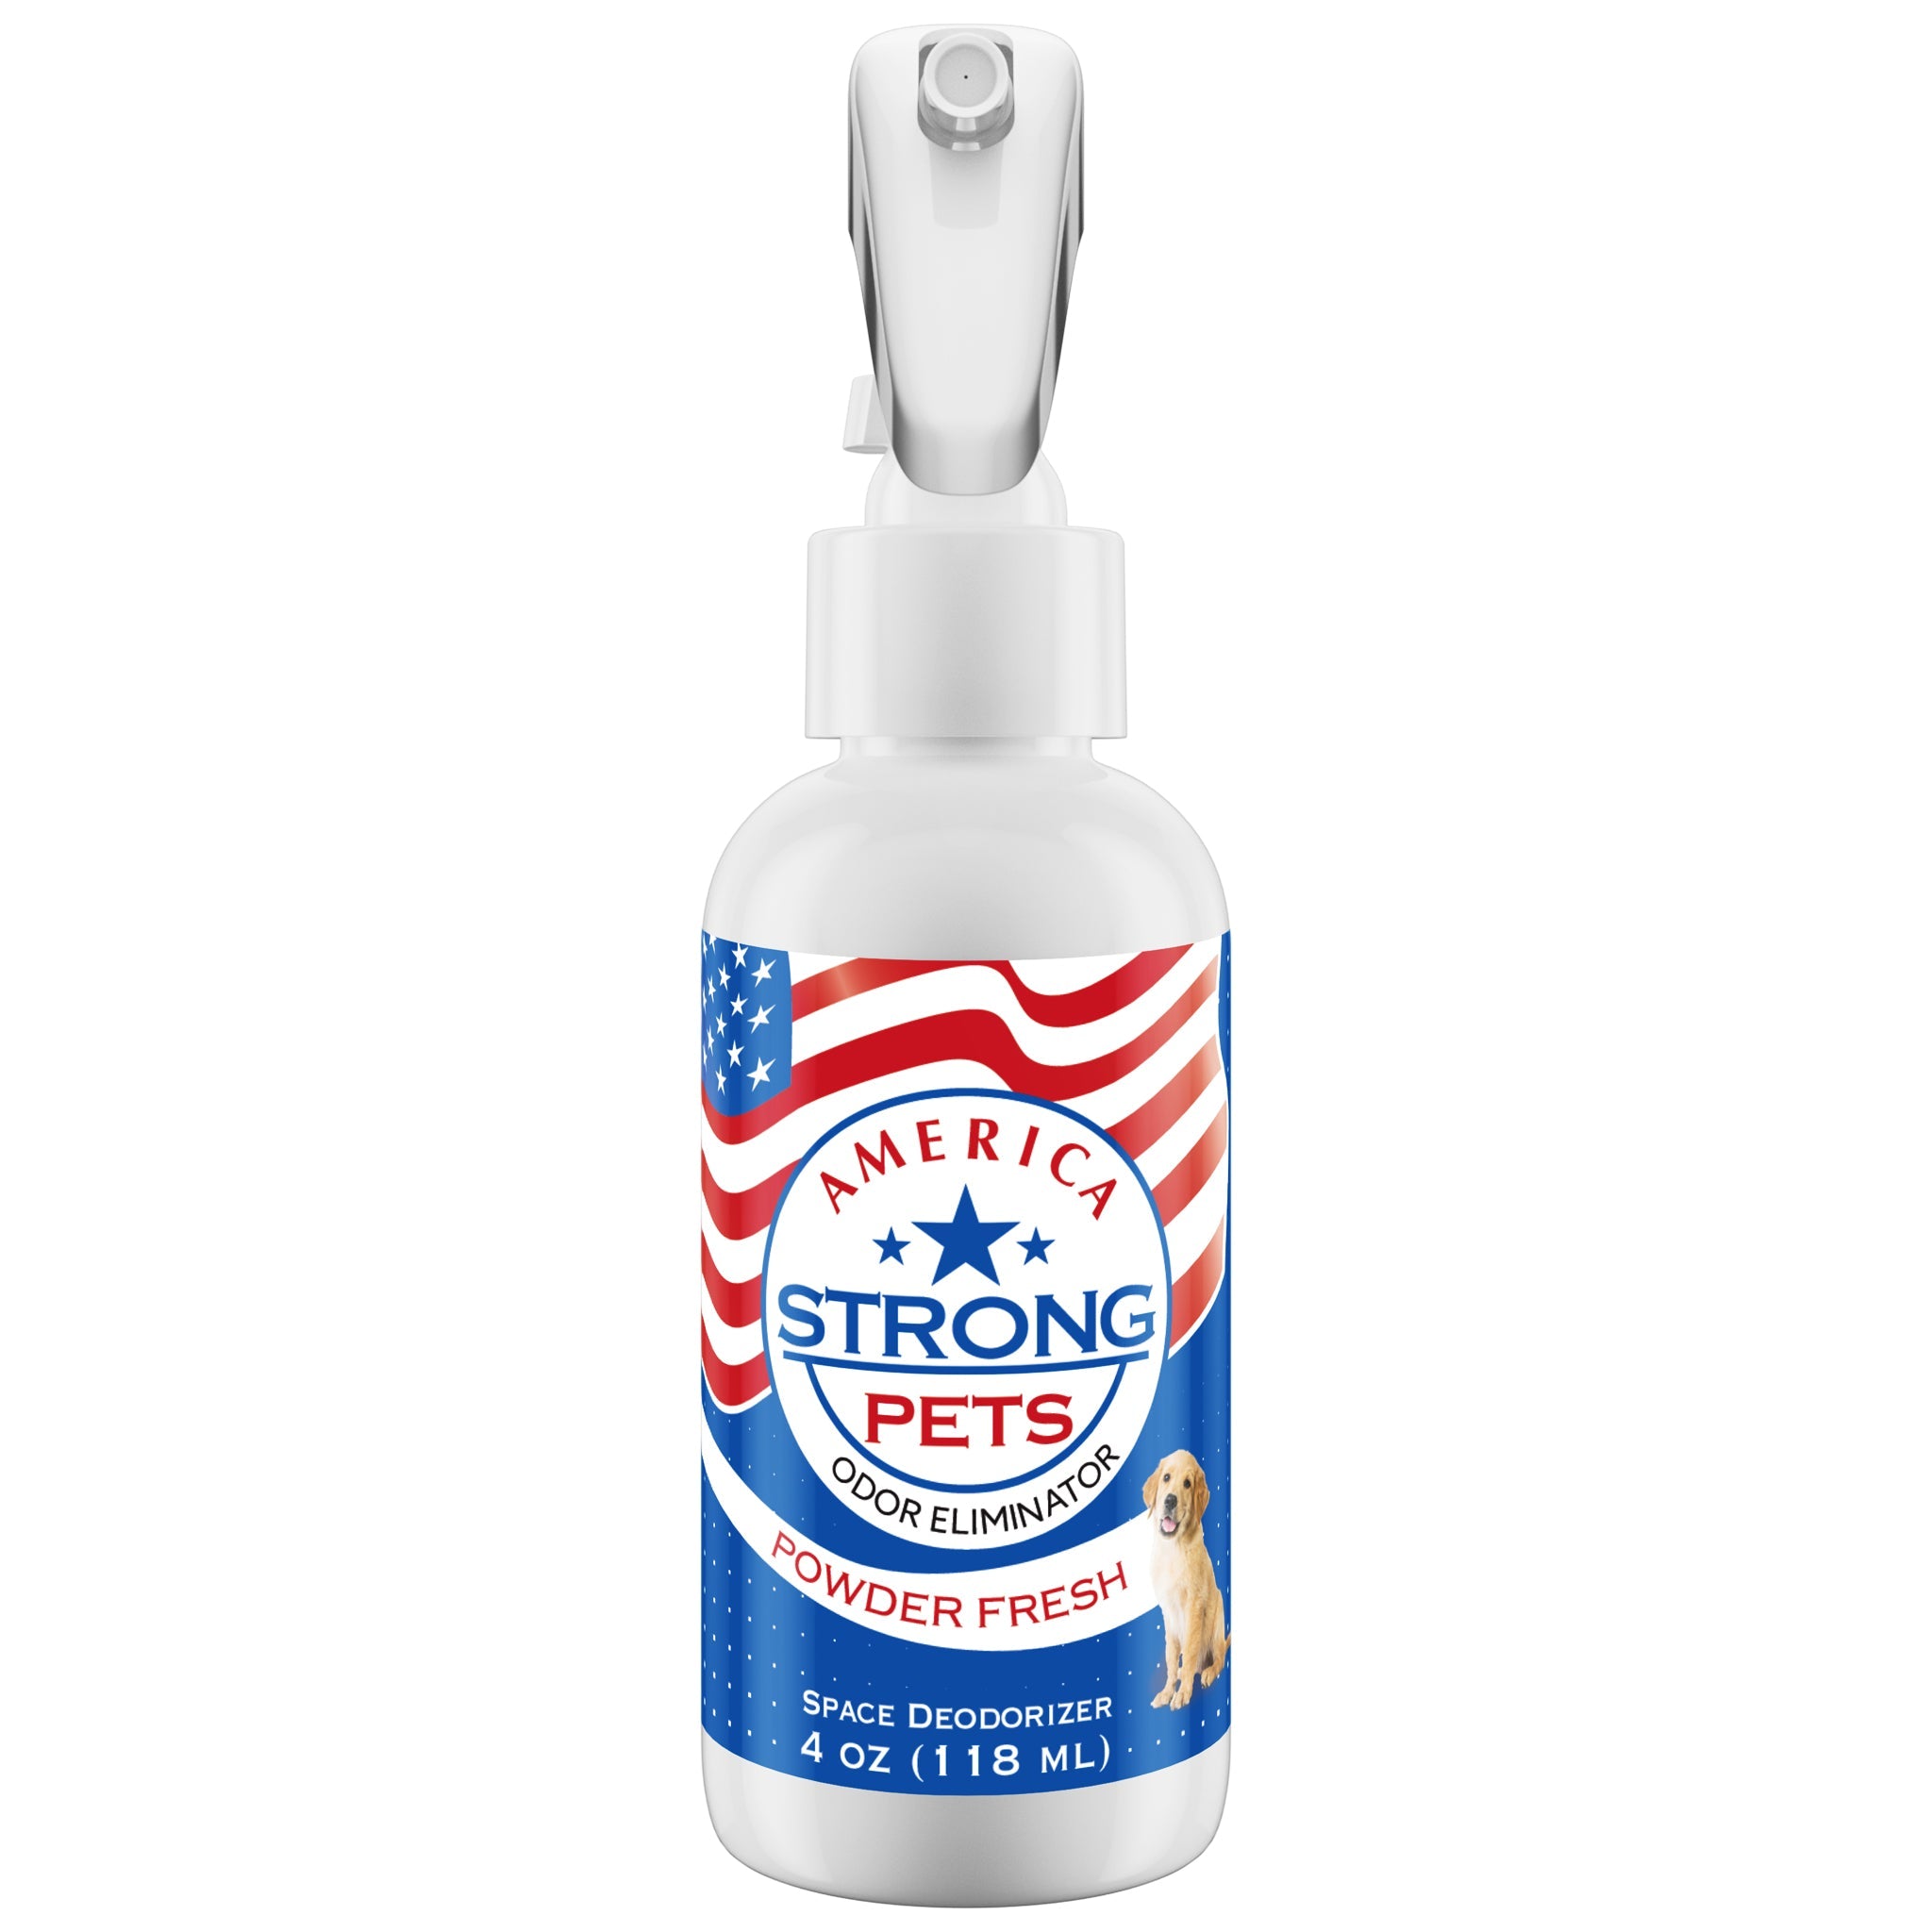 America Strong Pet Odor Eliminator - Powder Fresh Scent Size: 4 fl oz